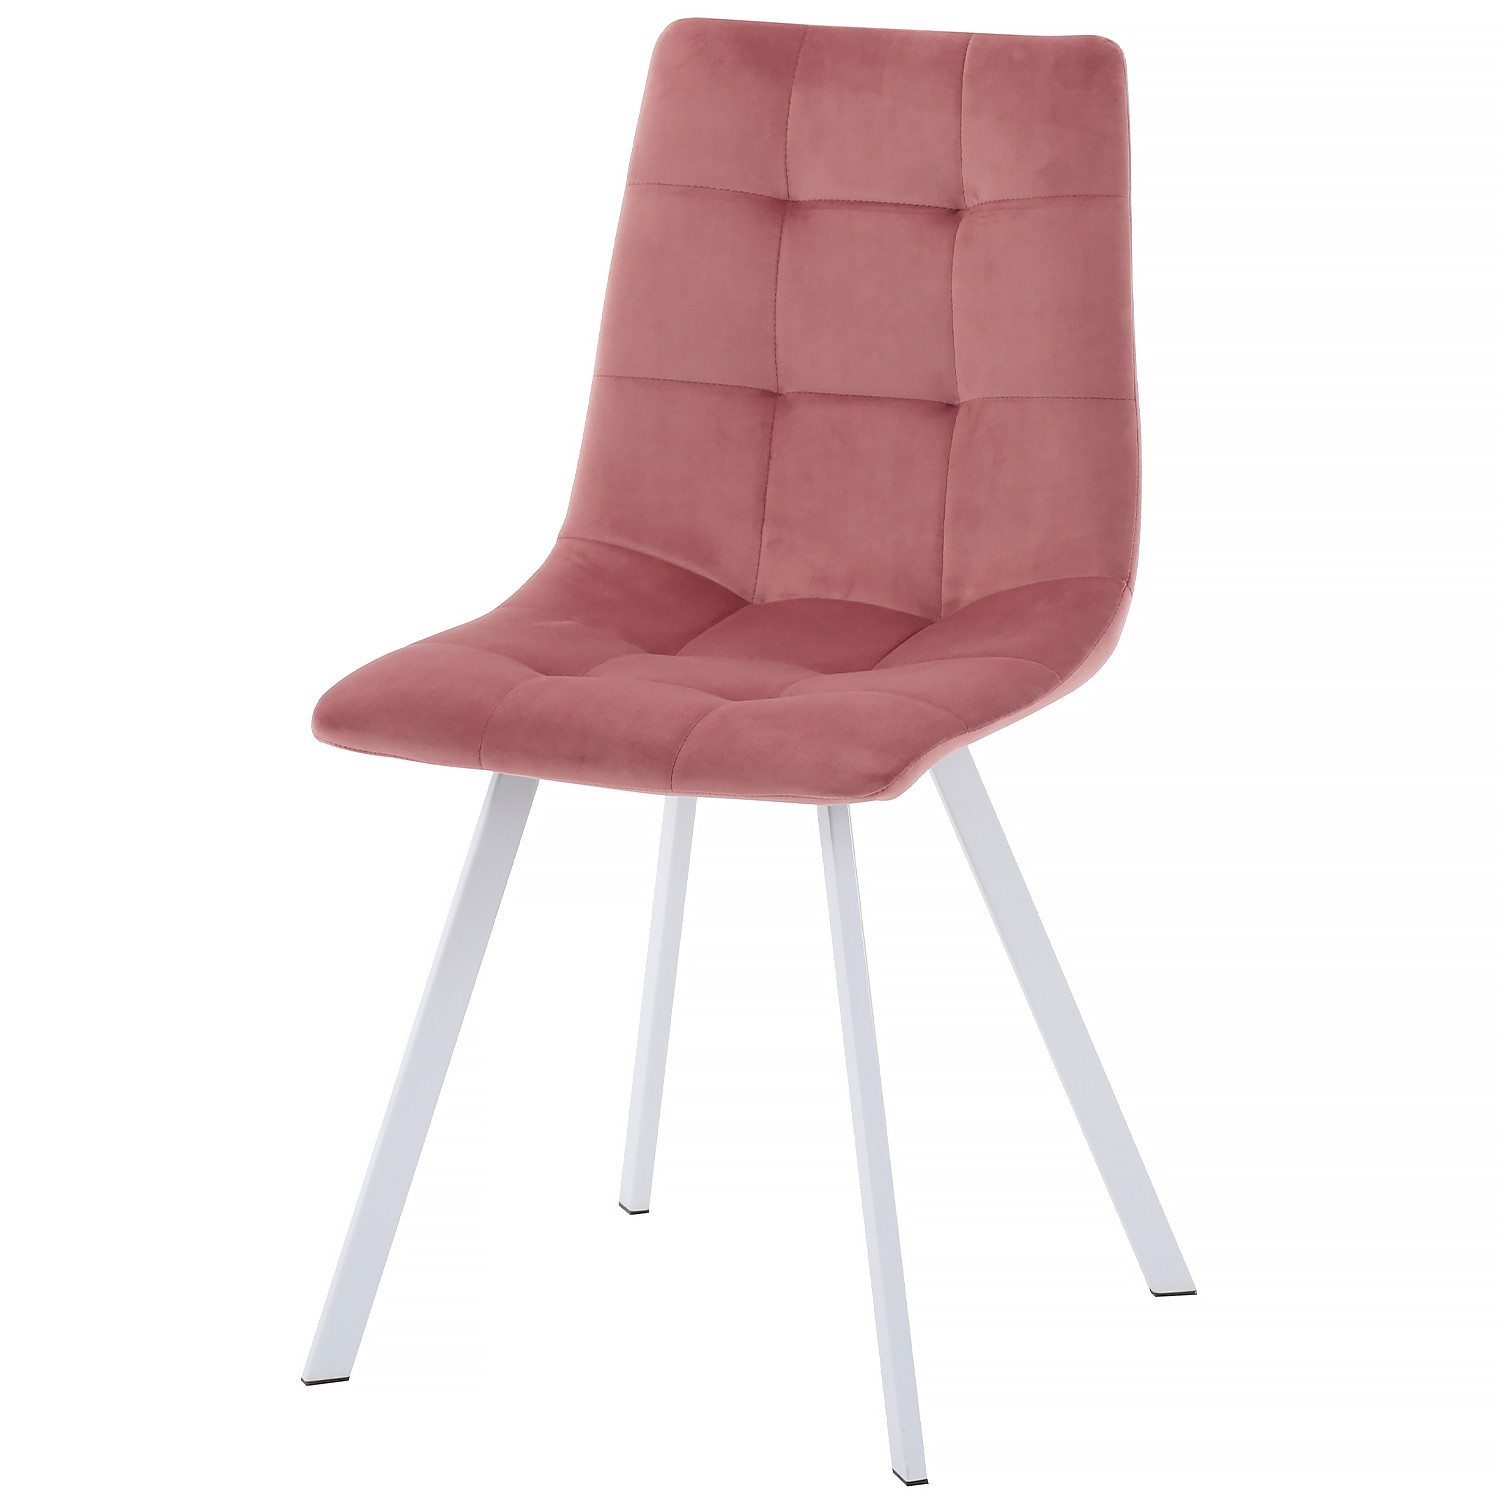 Стулья для кухни MIA розовый нюд / белый фото 1 — New Style of Furniture